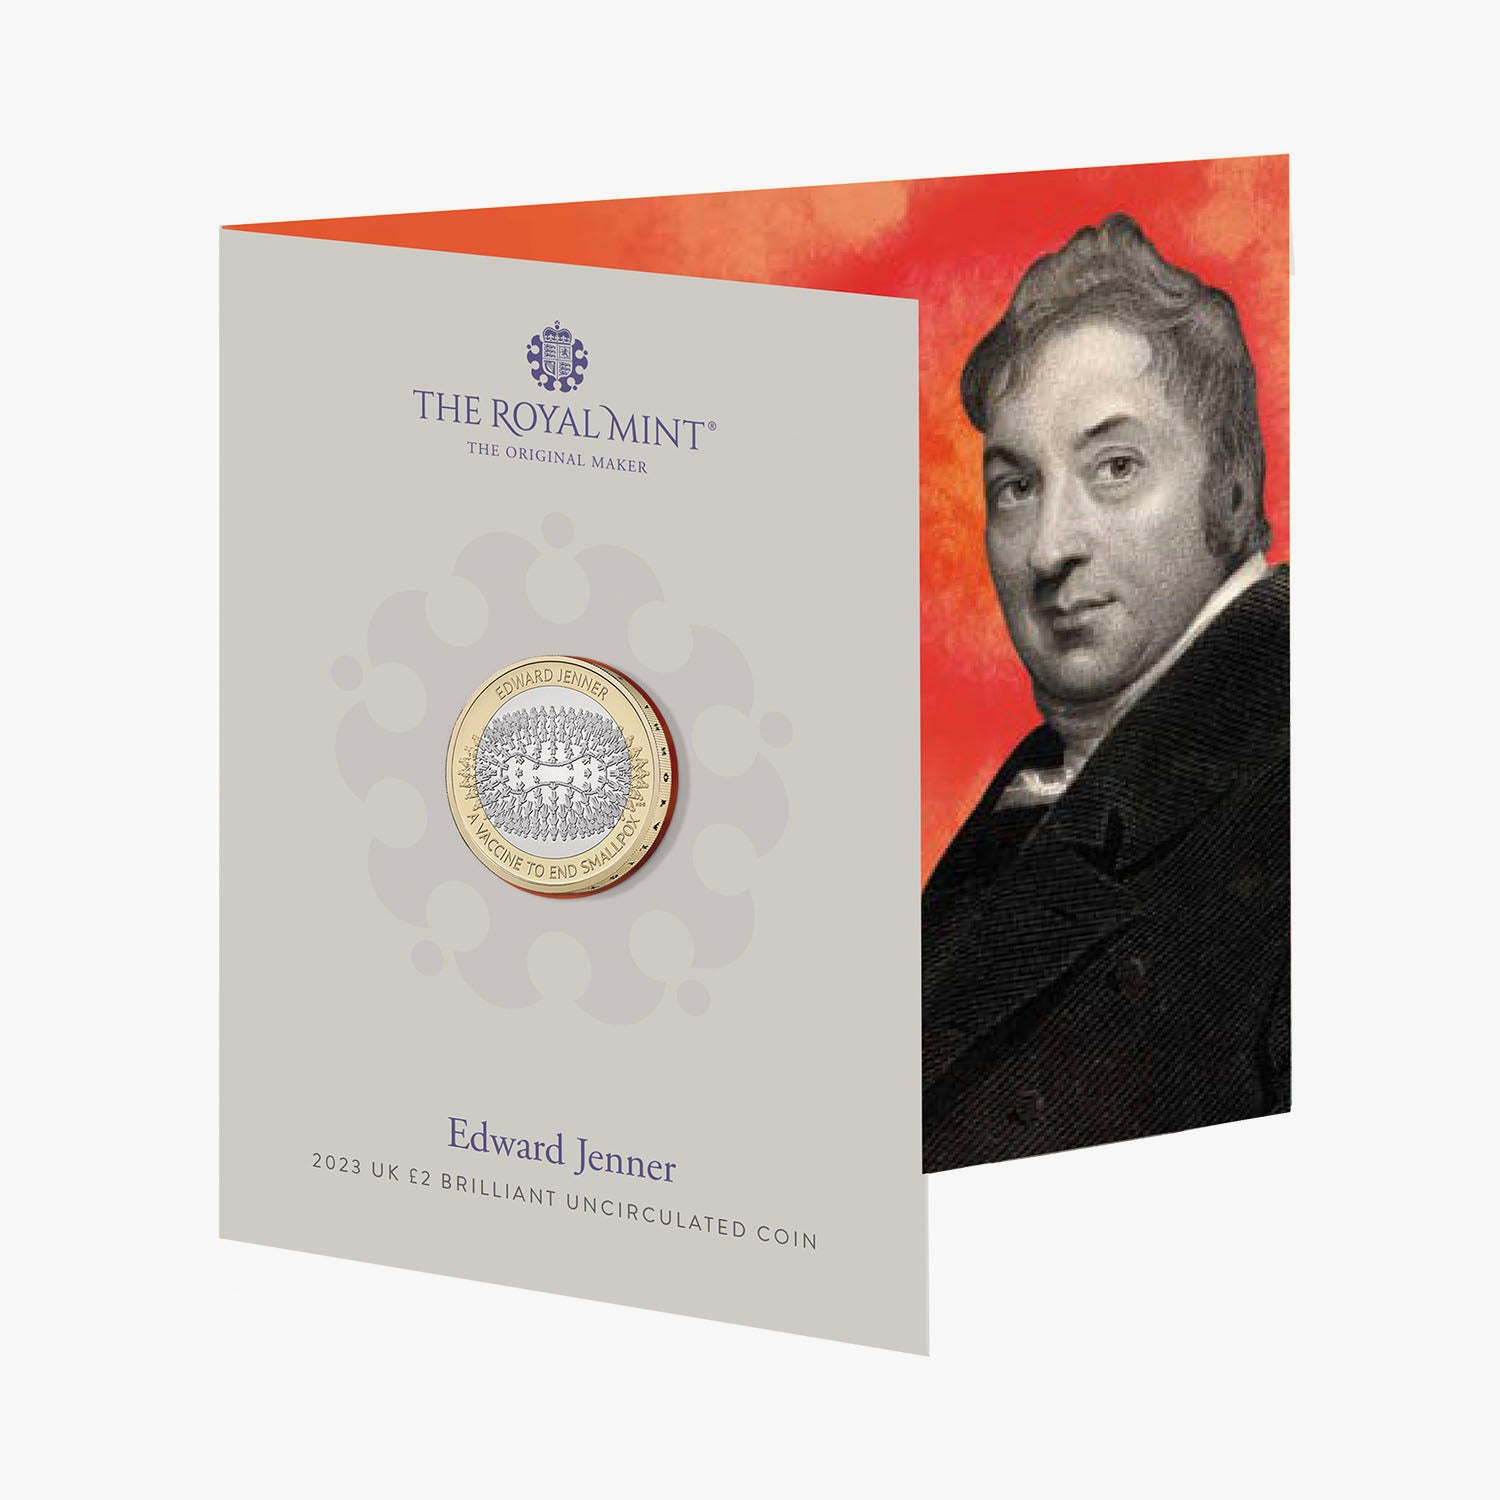 Edward Jenner 2023 UK £2 Brilliant Uncirculated Coin